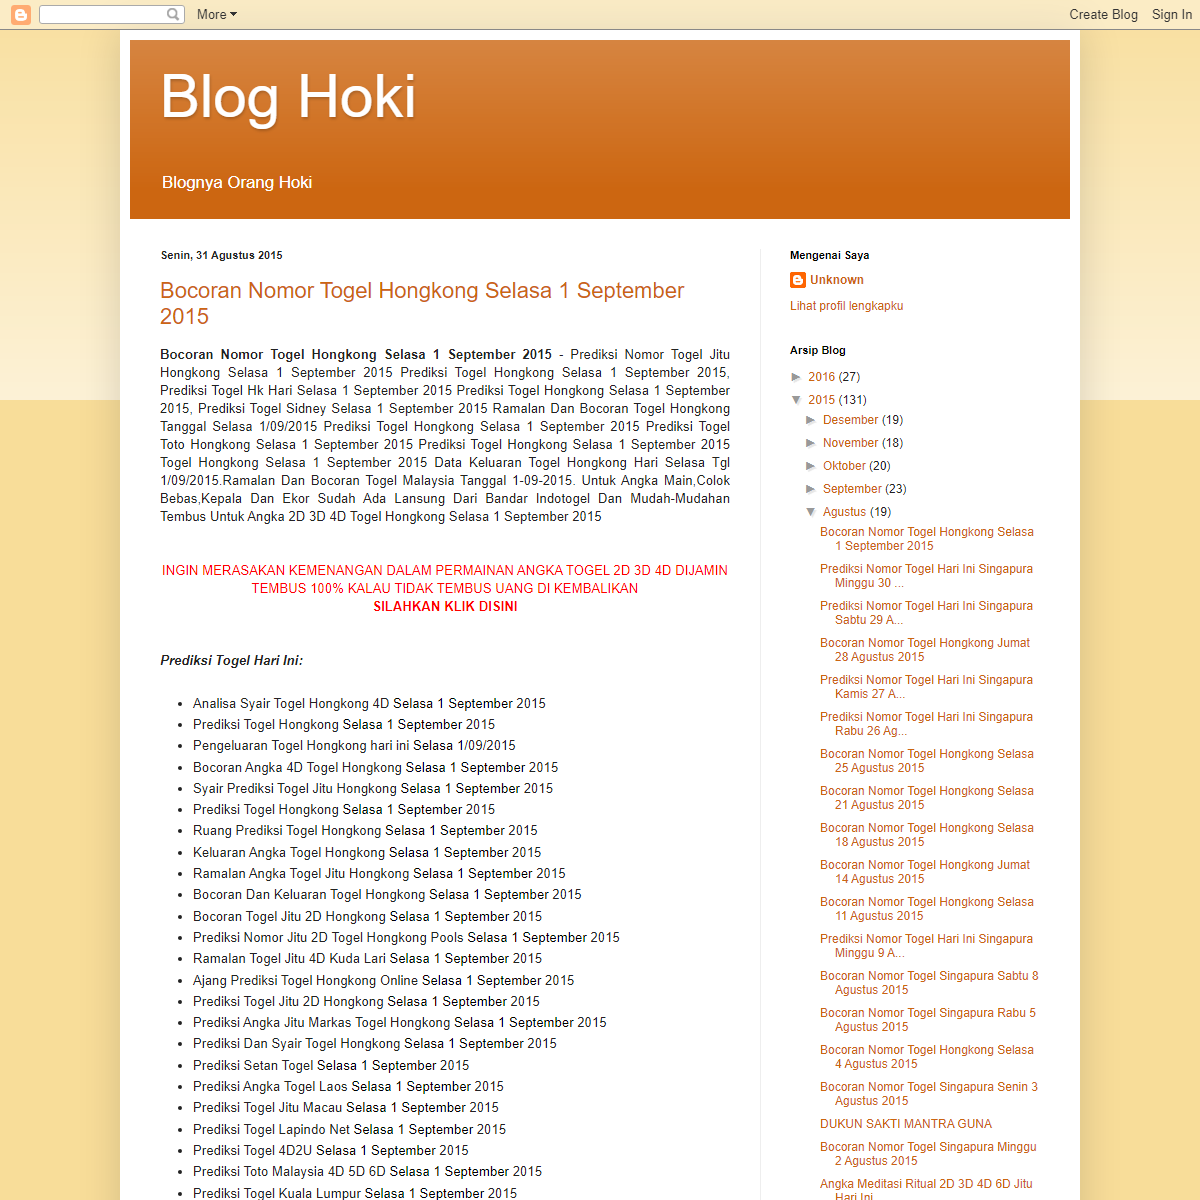 A complete backup of https://bunghoki.blogspot.com/2015/08/